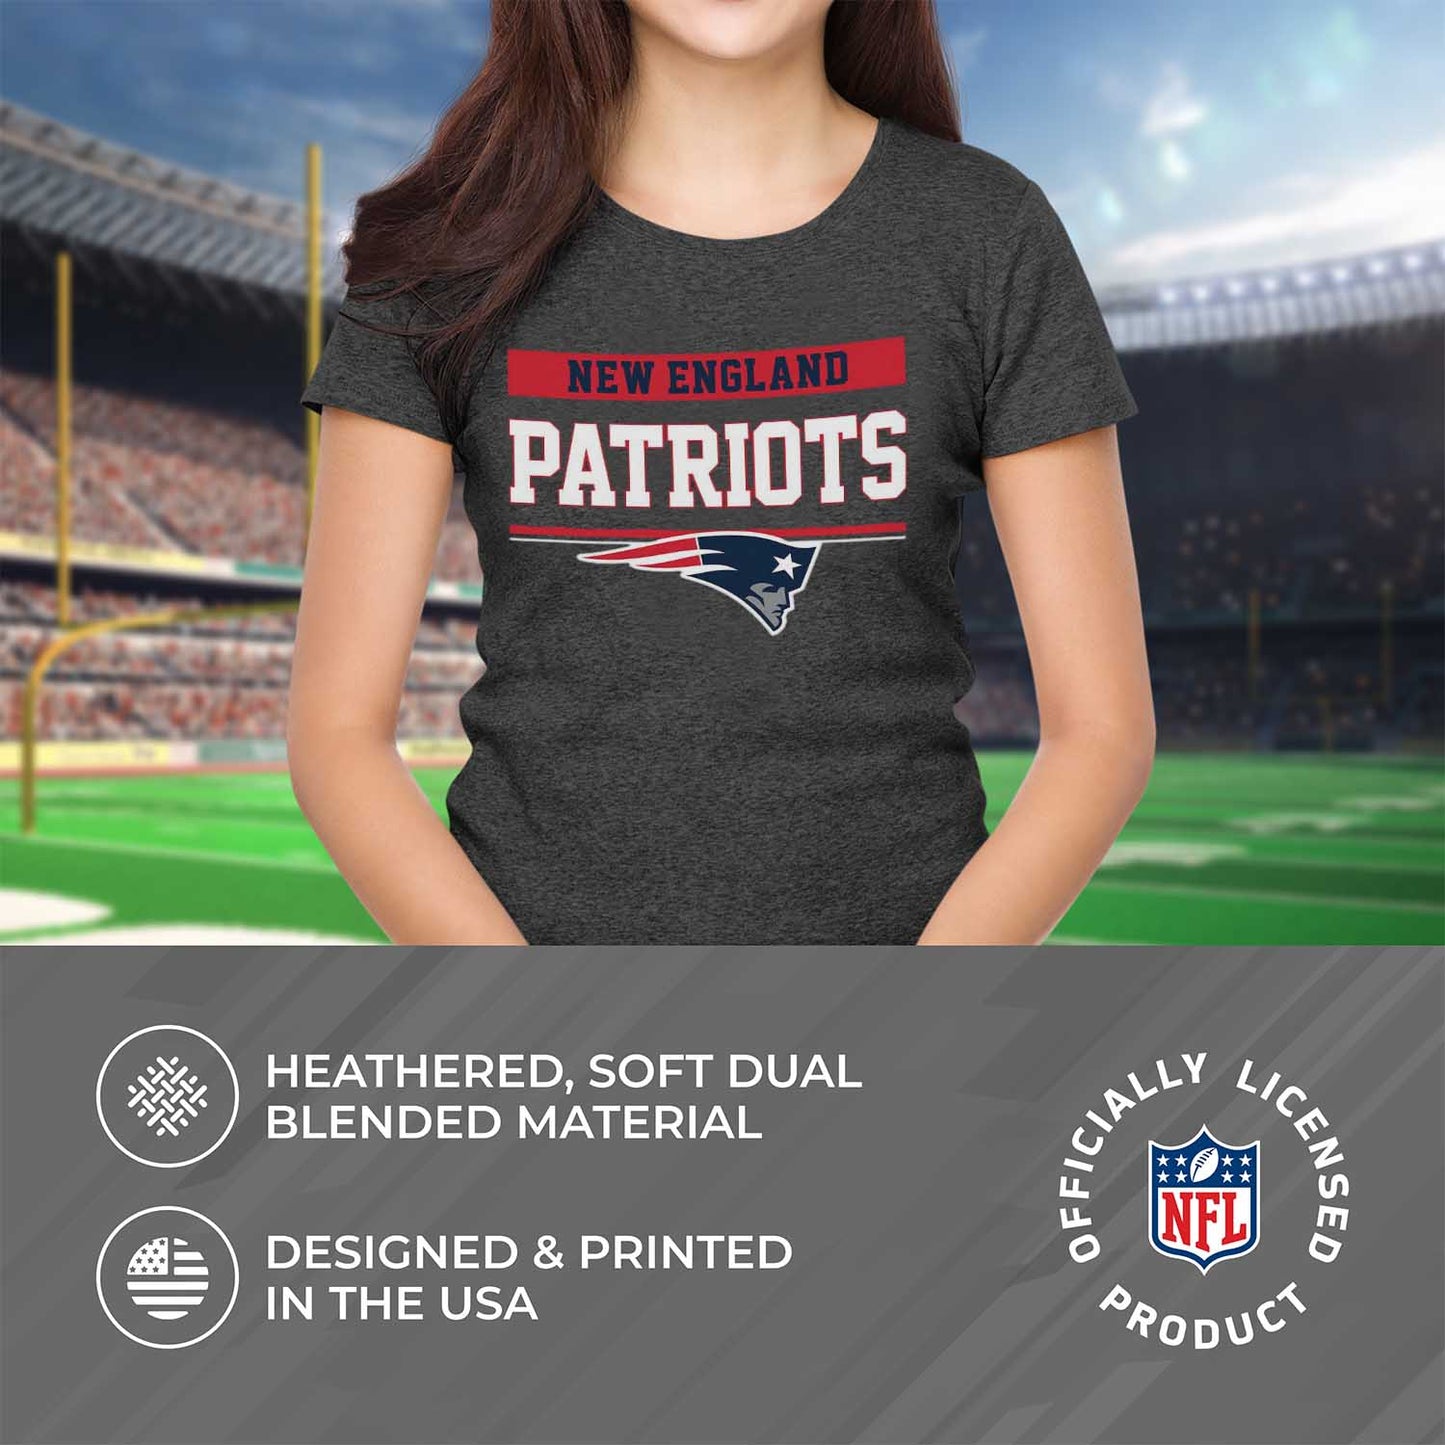 New England Patriots NFL Women's Team Block Charcoal Tagless T-Shirt - Charcoal